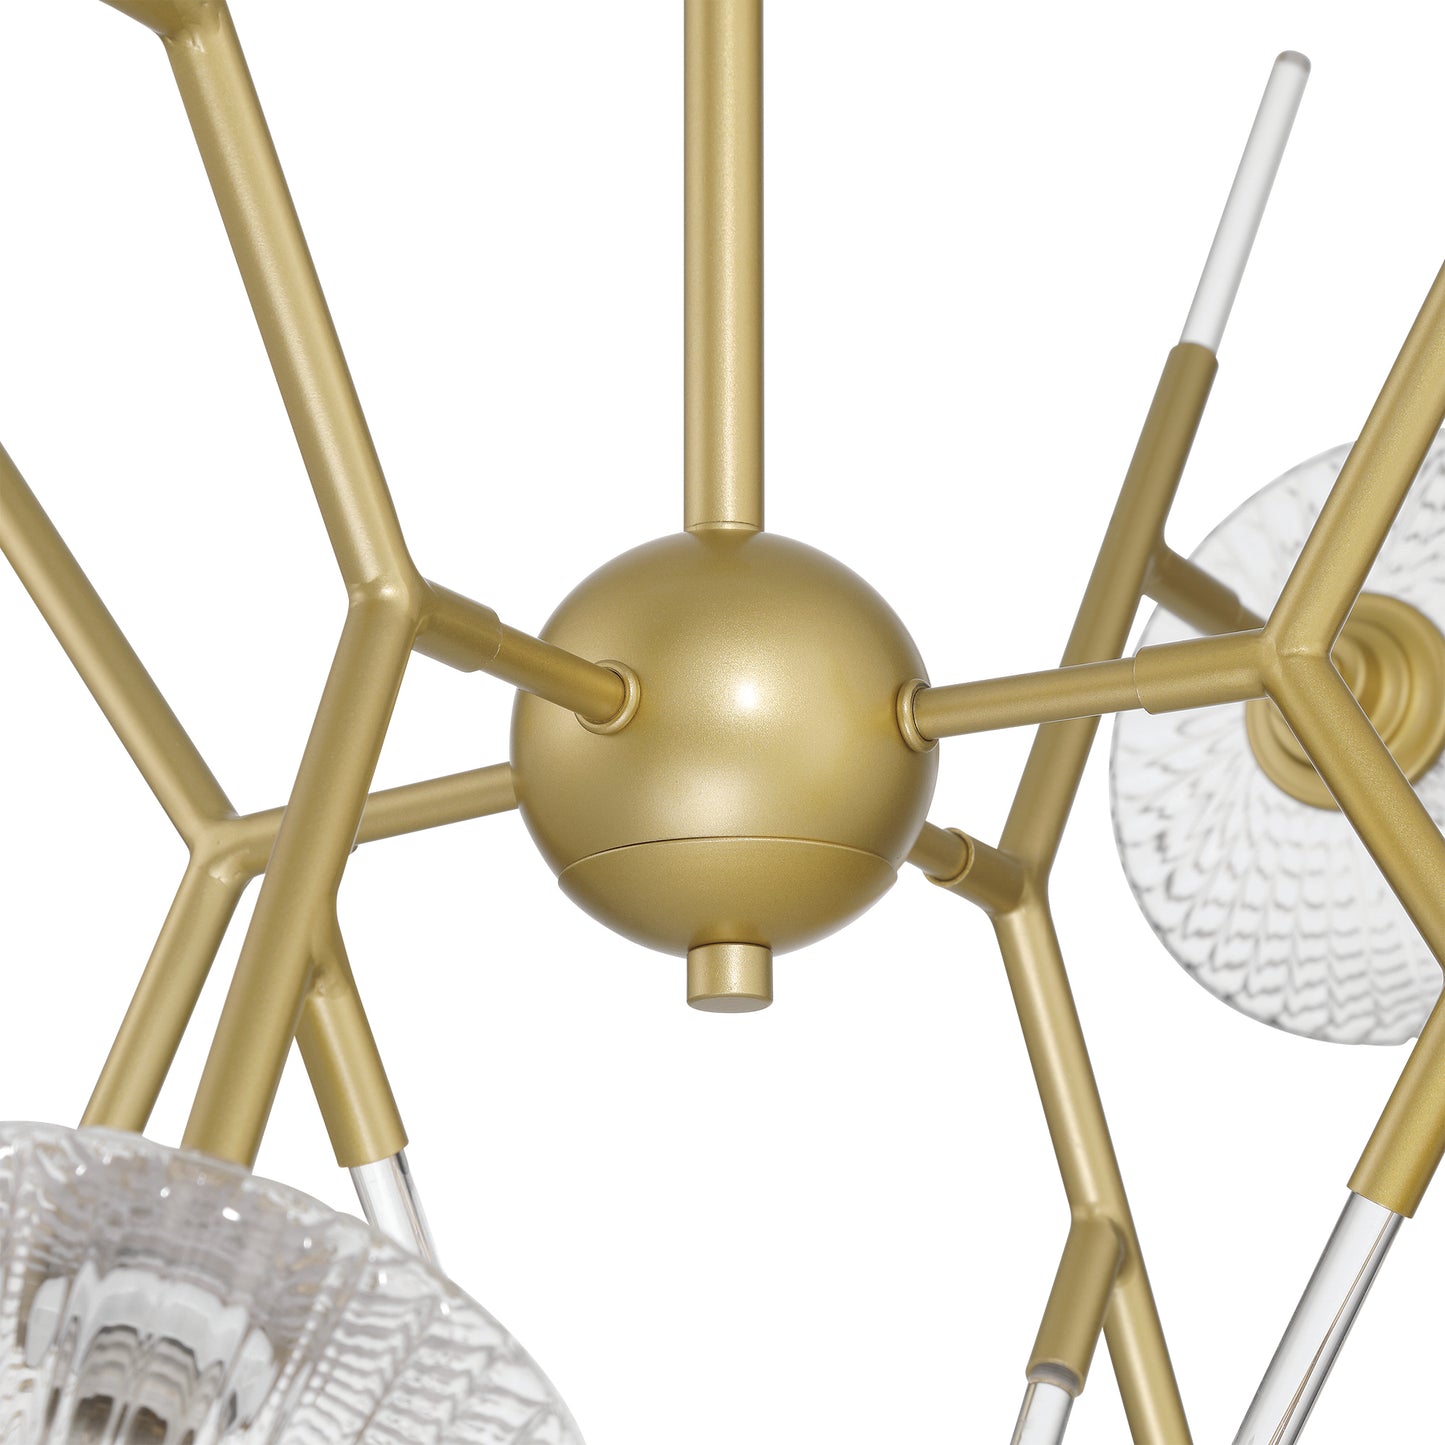 8 light sputnik empire chandelier (7) by ACROMA